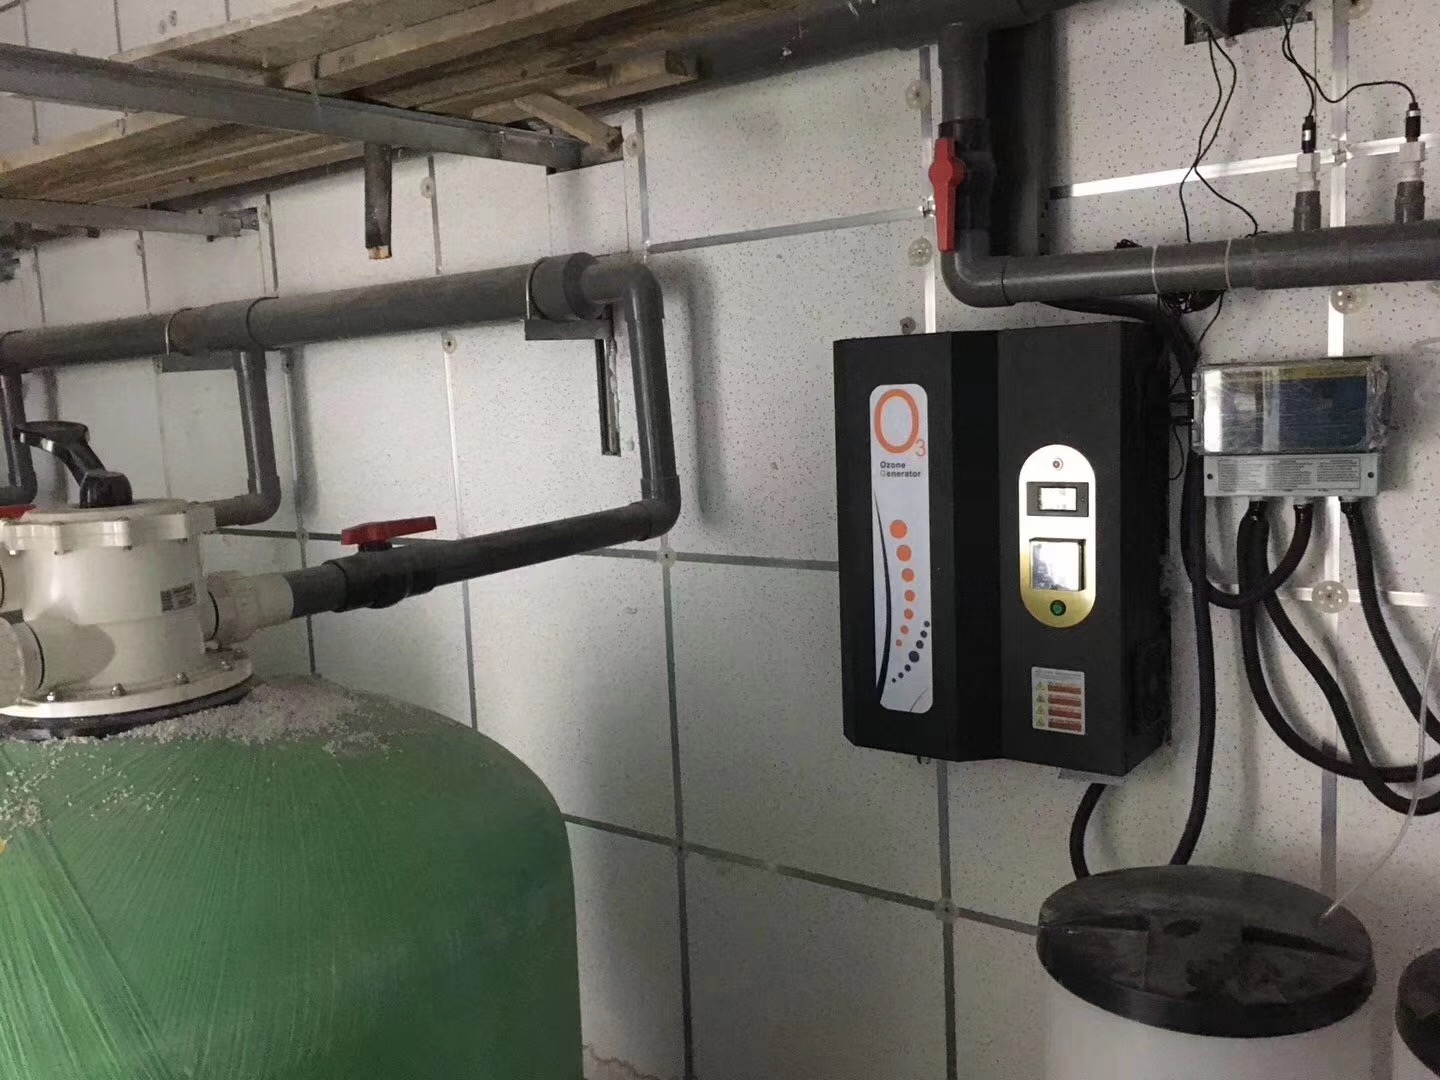 A club swimming pool in Beijing uses Aike AO ozone generator